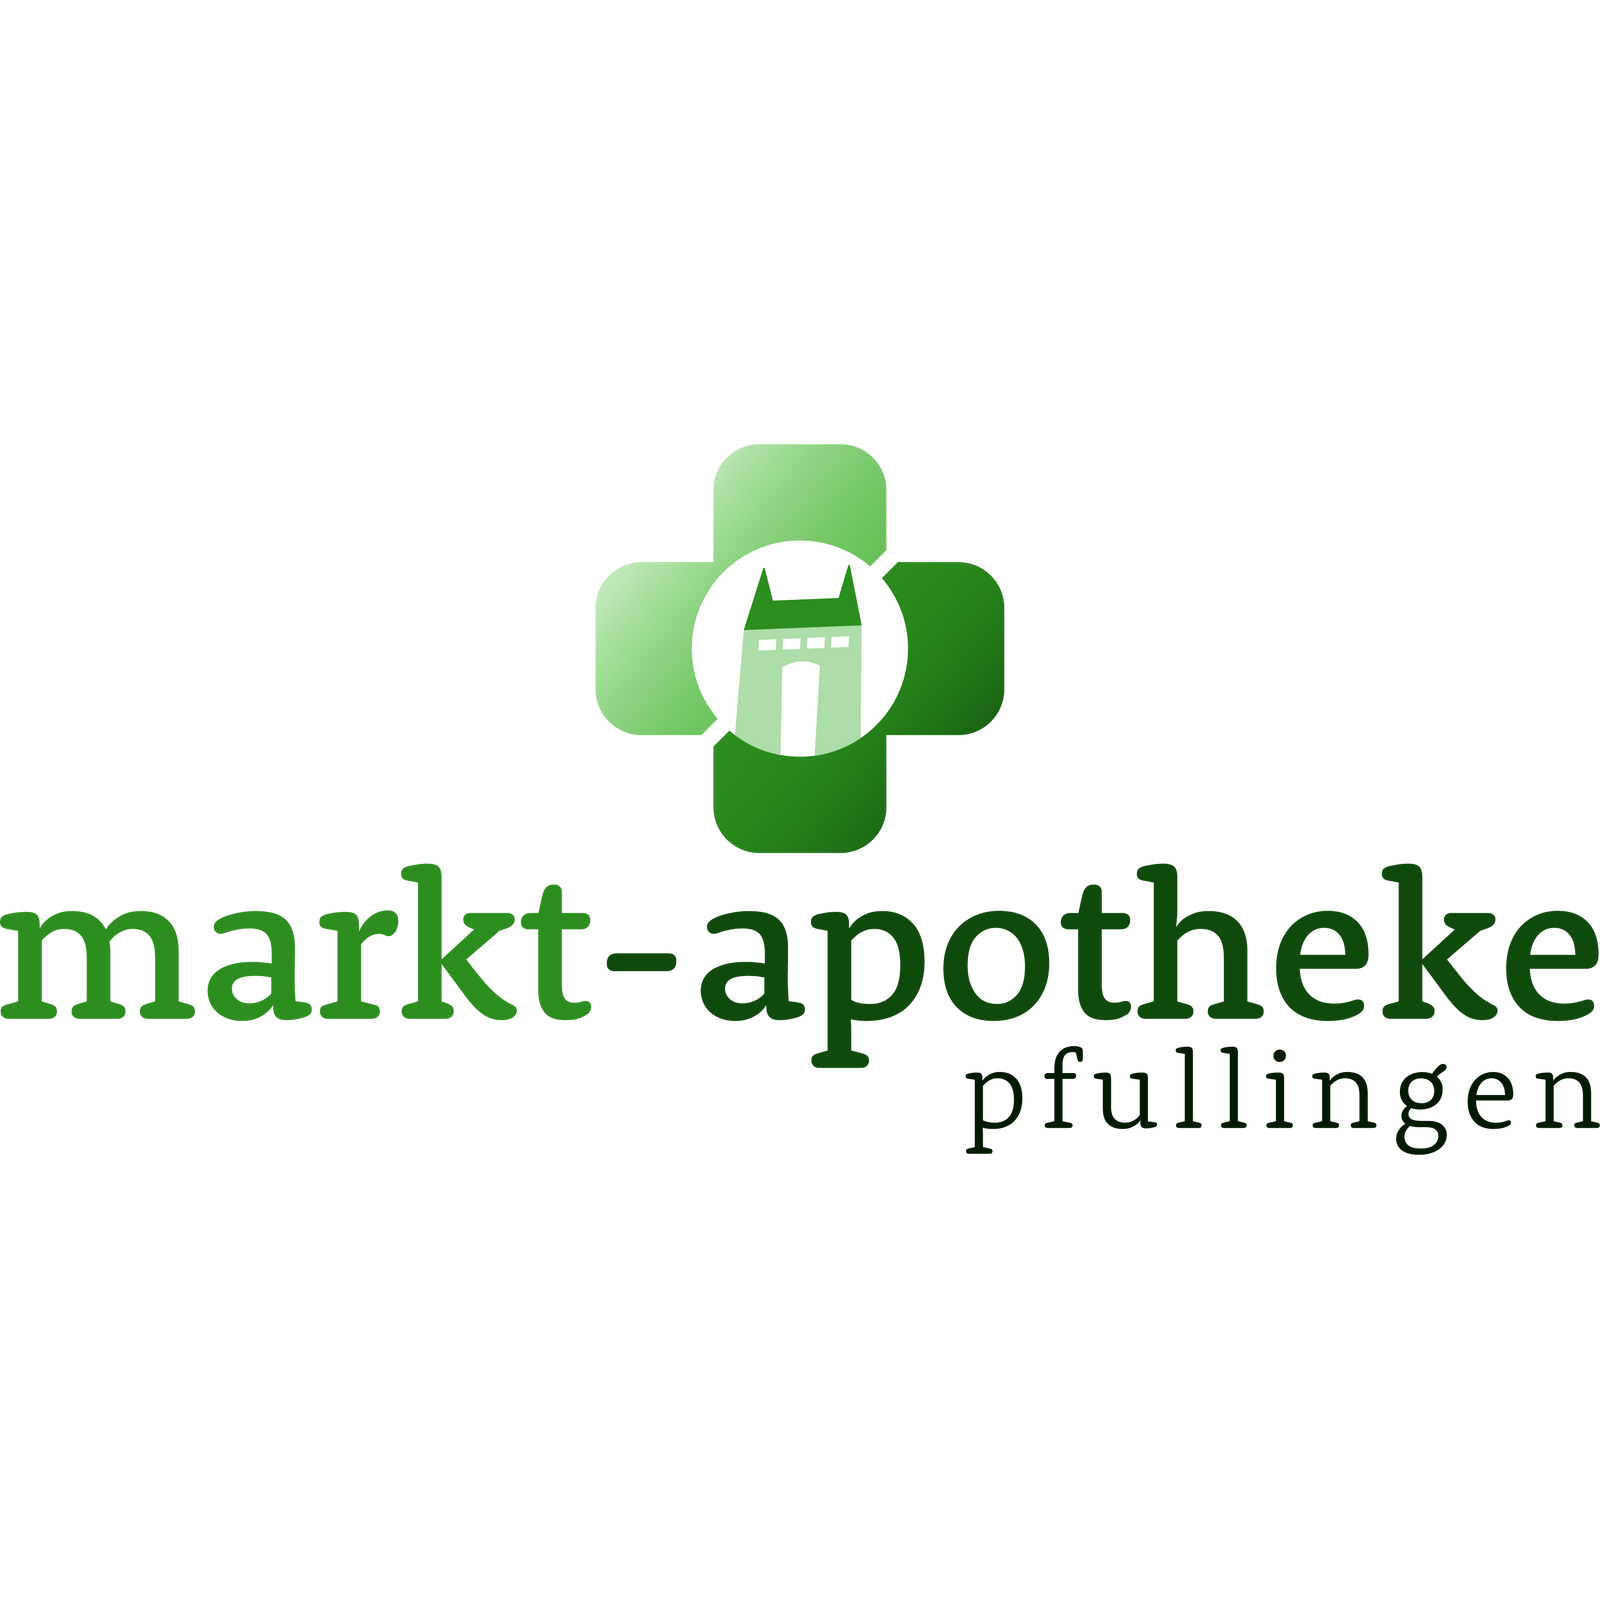 Logo Logo der Markt-Apotheke